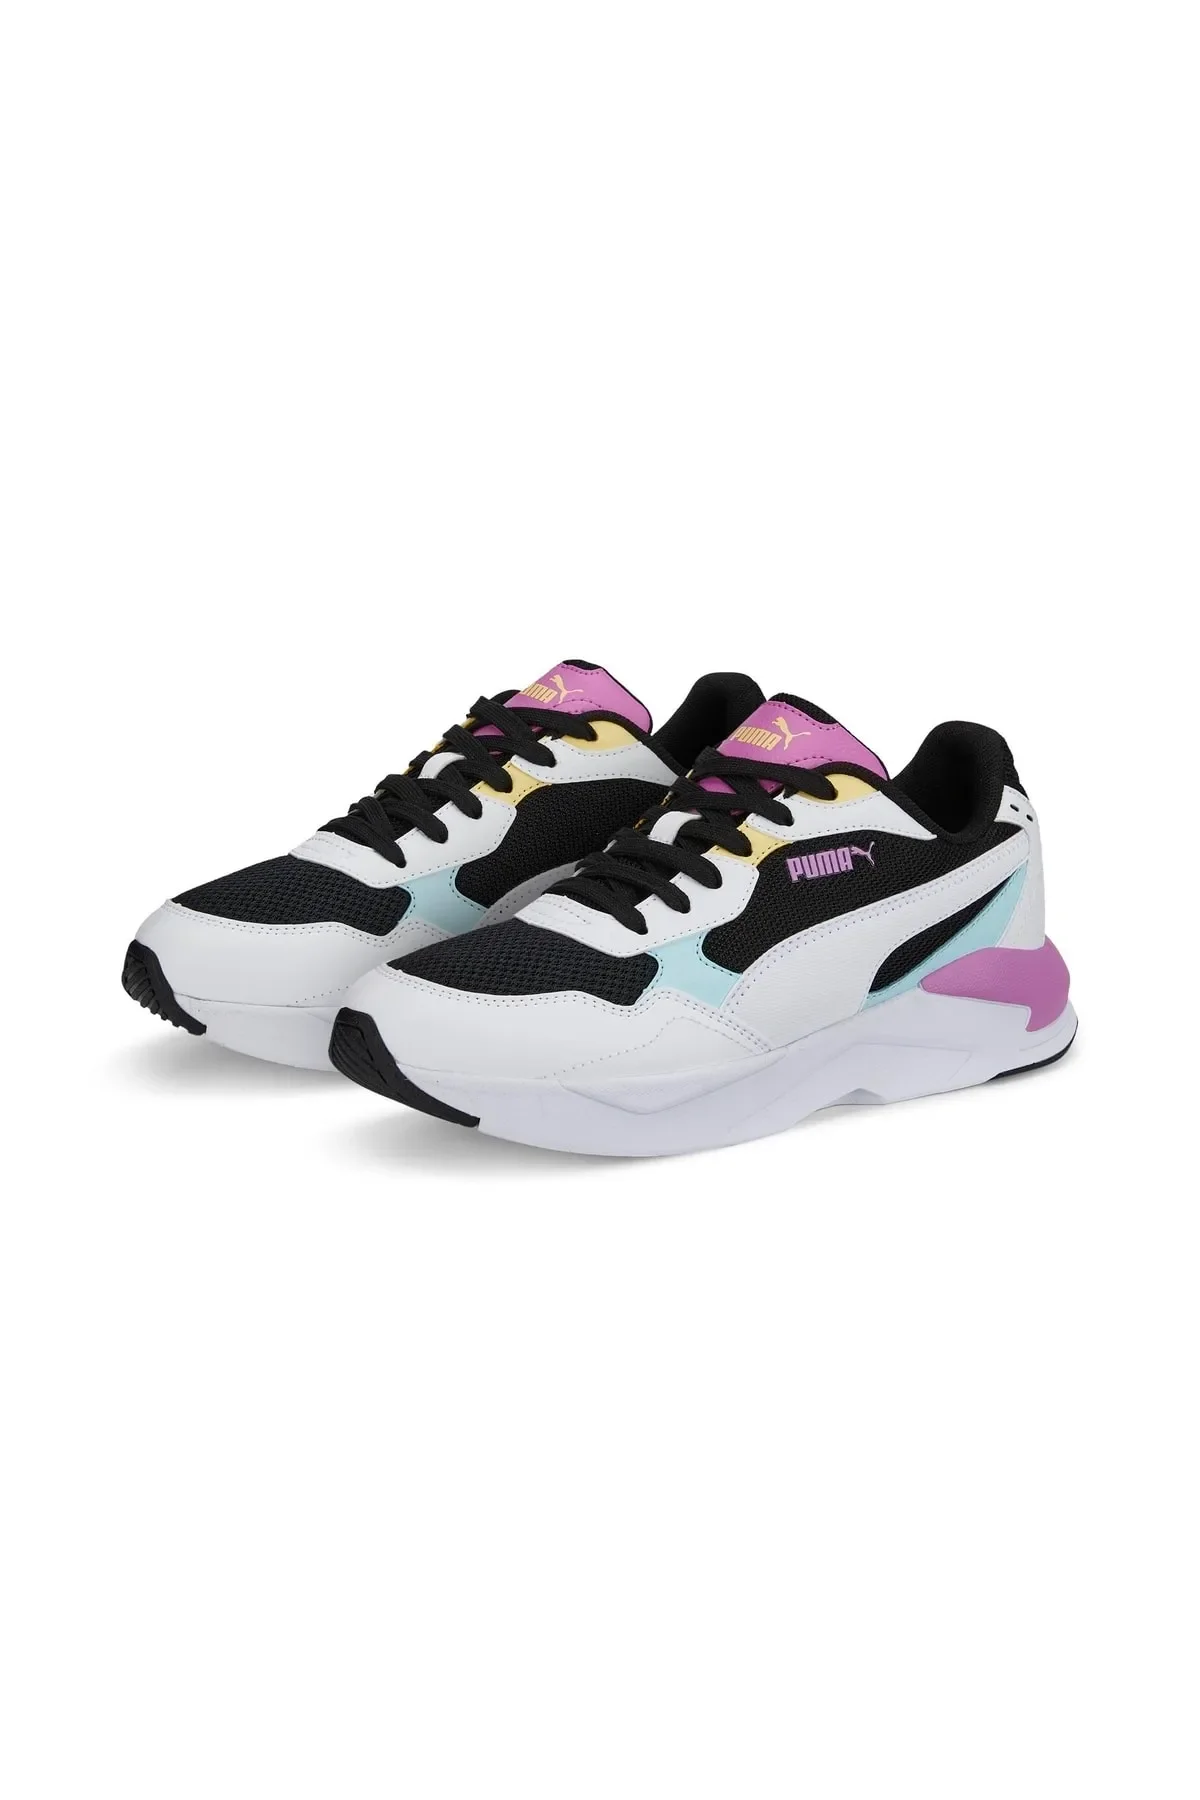 X-Ray Speed Lite - Kadın Sneaker Ayakkabı 384639 -Siyah - 9